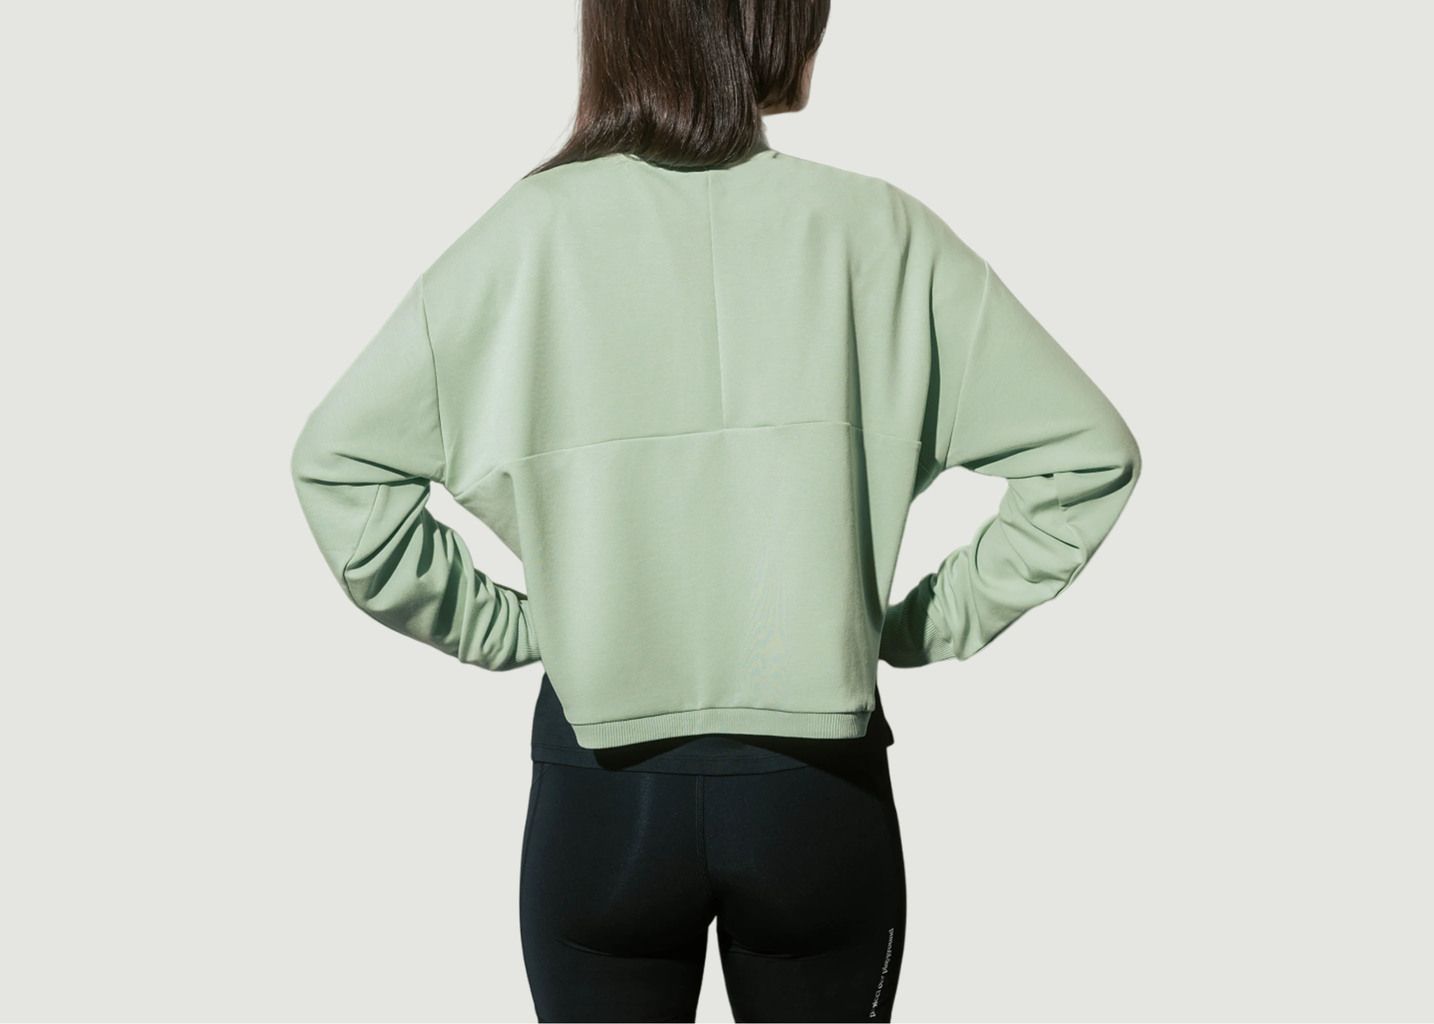 Get Lucky Limited Edition Sweatshirt - Circle Sportswear